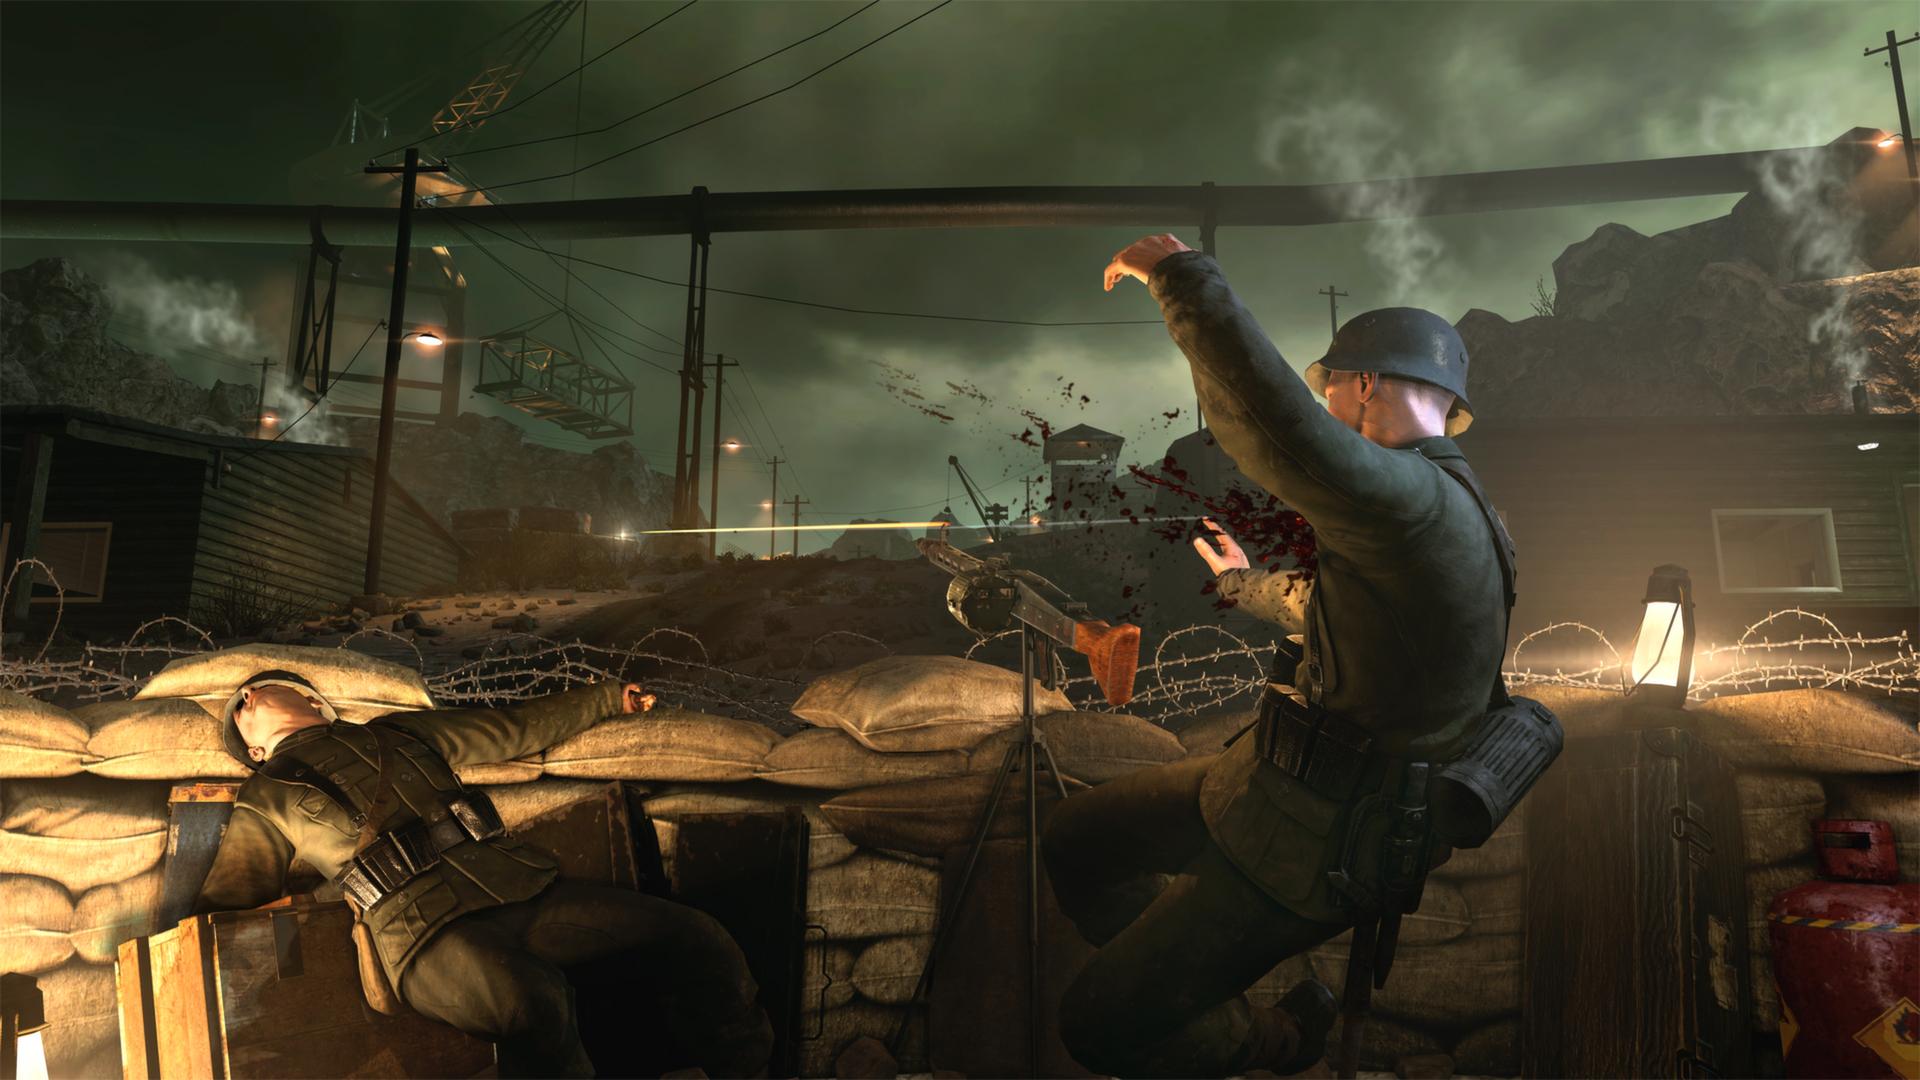 Screenshot №12 from game Sniper Elite V2